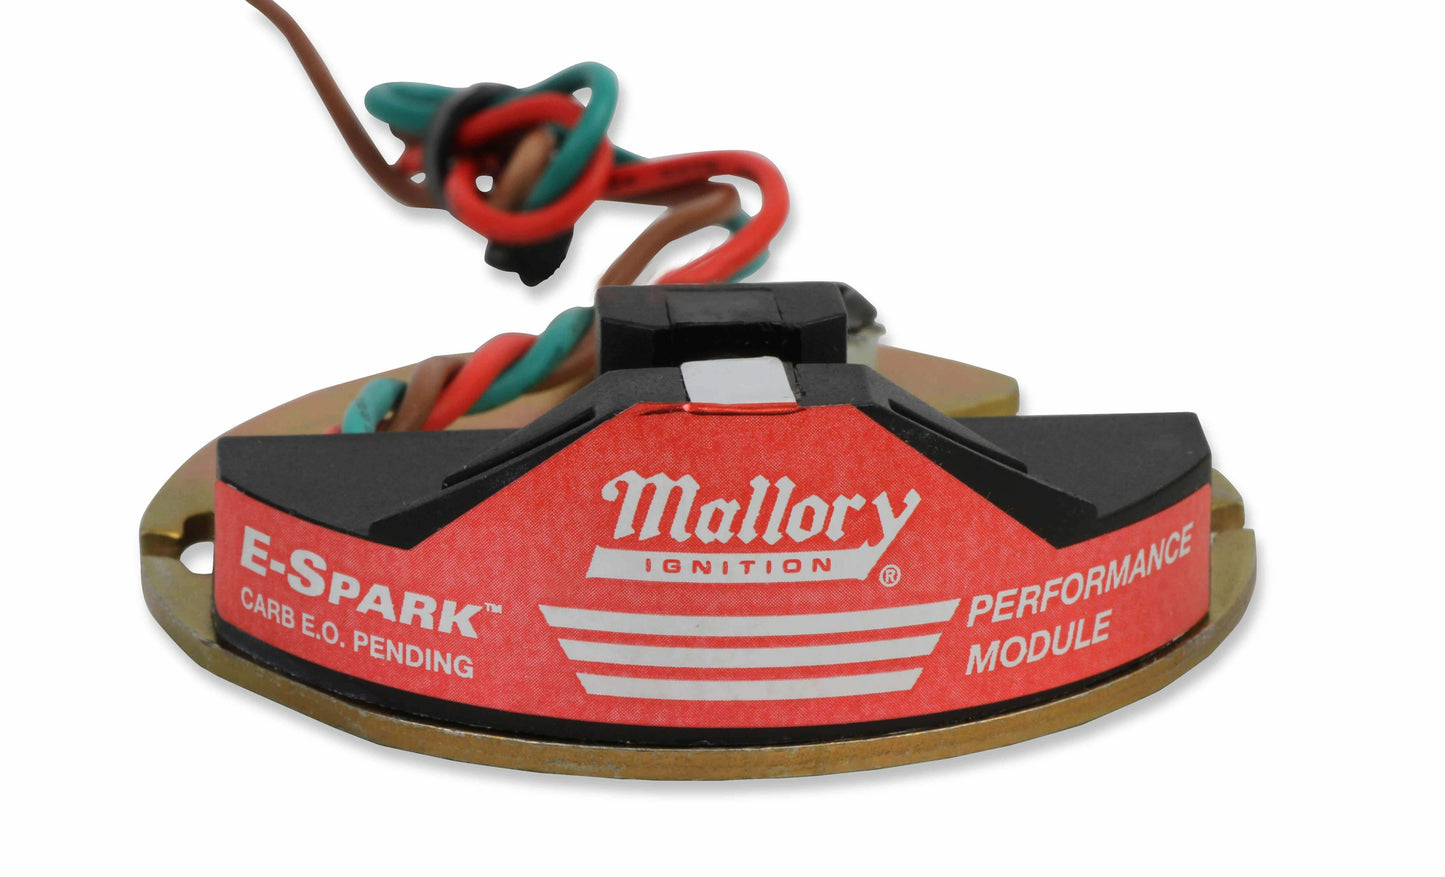 Mallory 61004M Mallory E-Spark; Conversion Kit